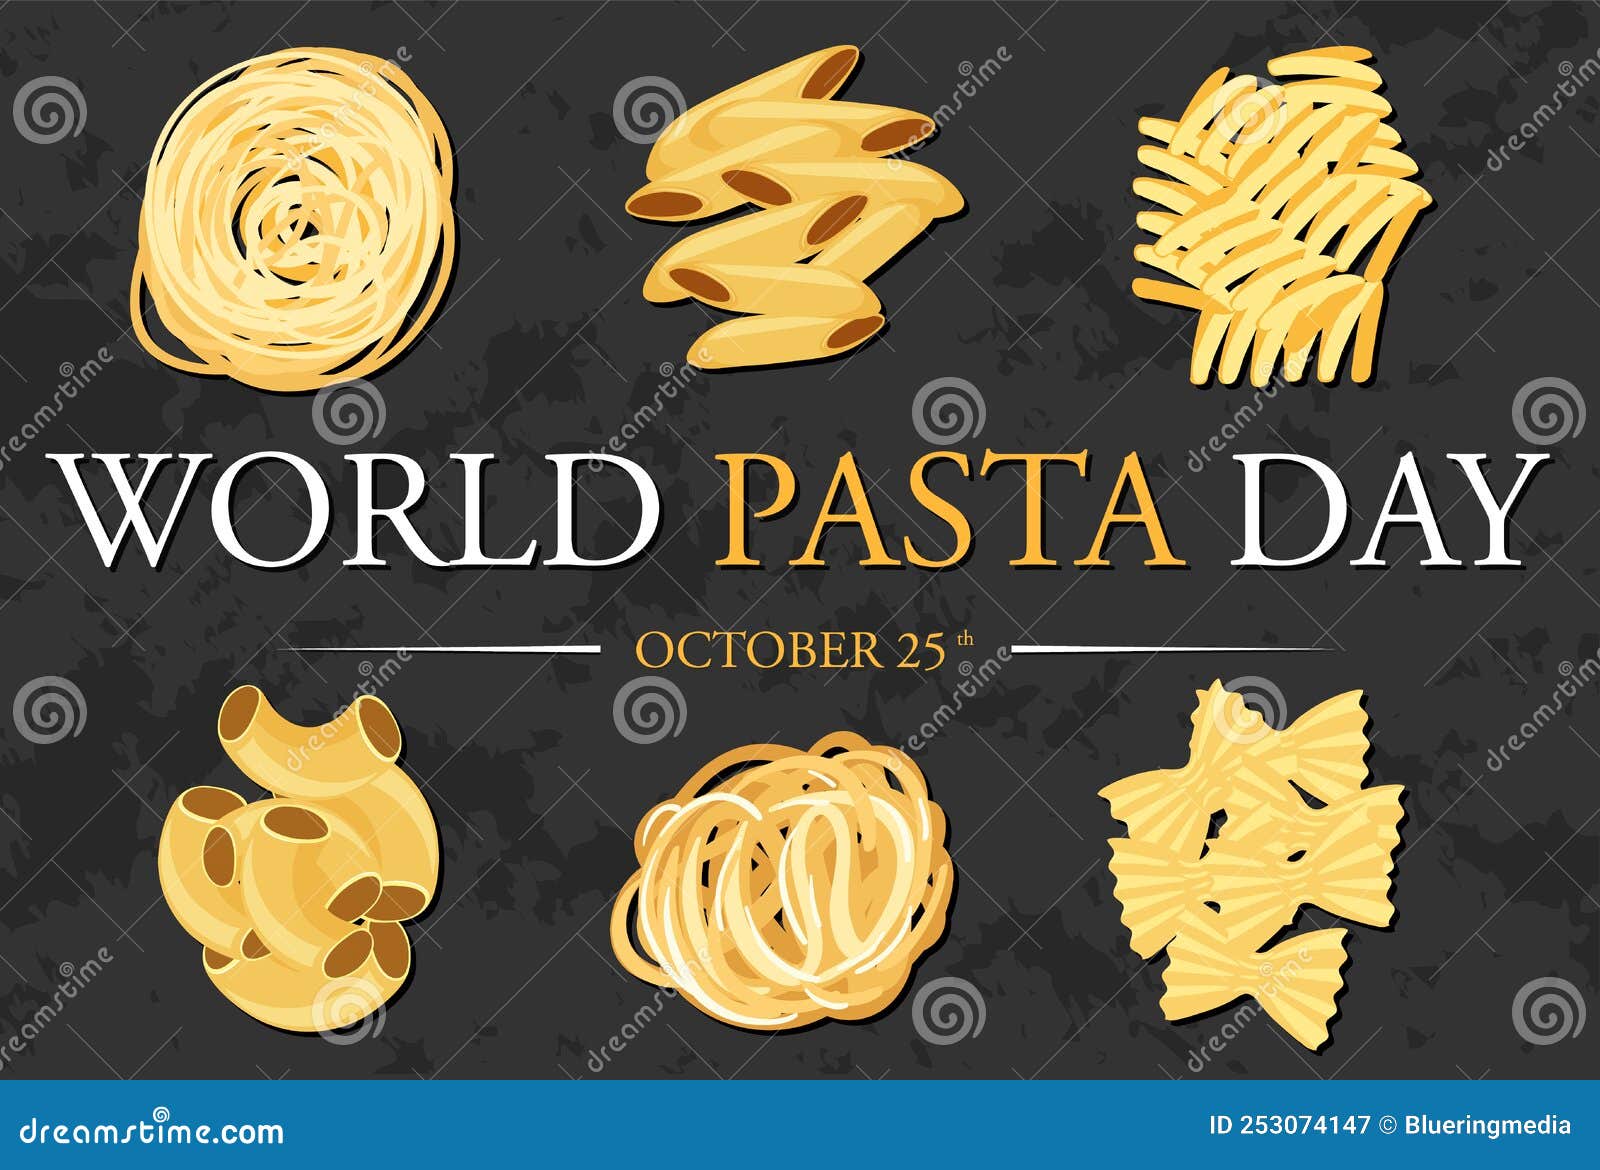 World Pasta Day Banner Design Stock Vector Illustration of template